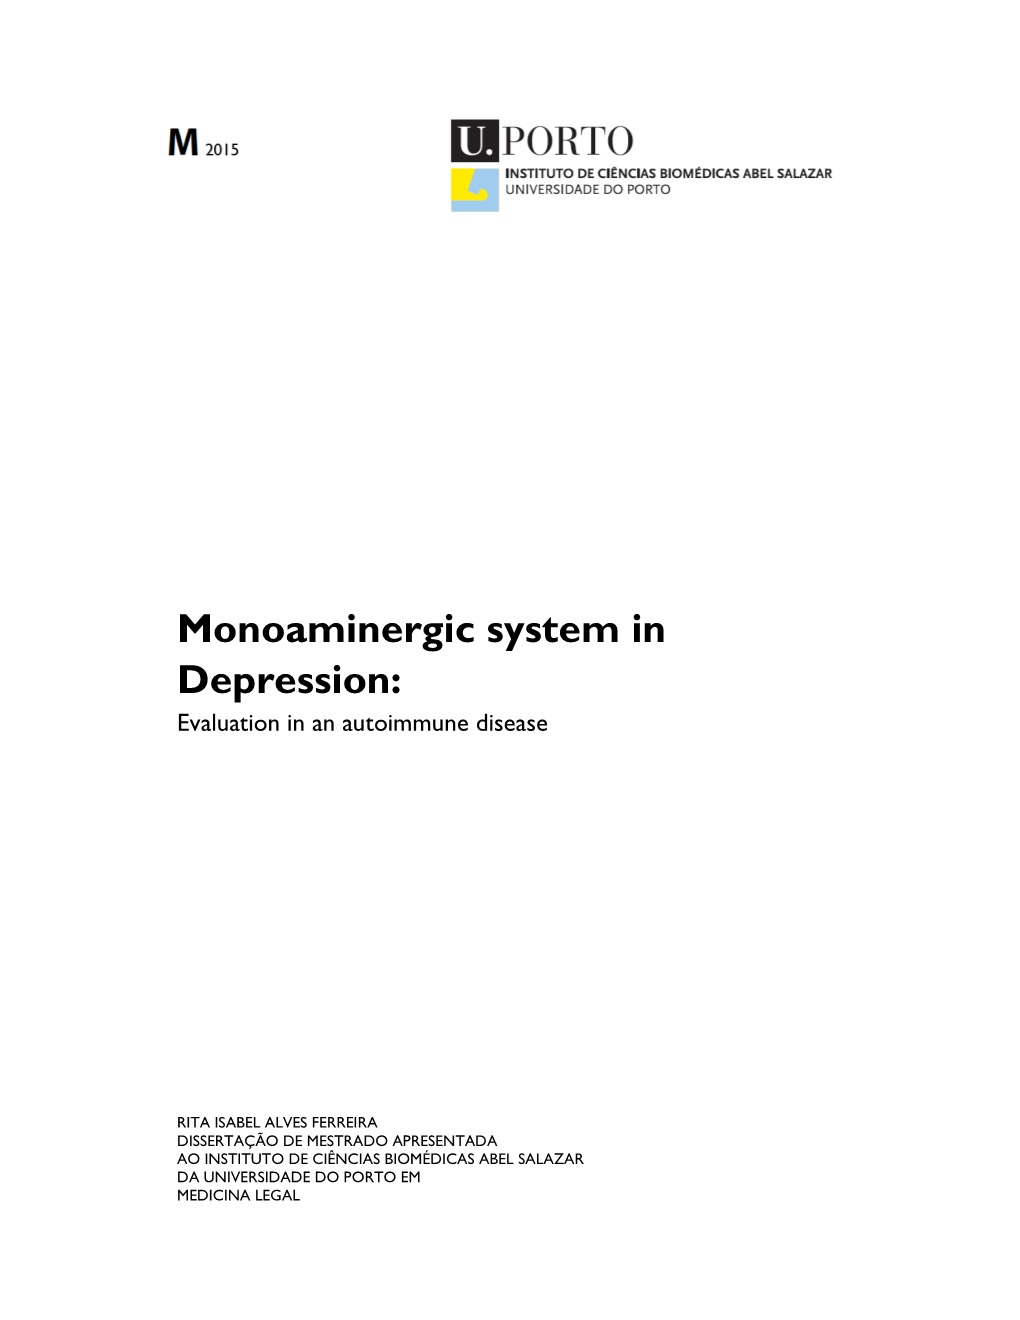 Monoaminergic System in Depression: Evaluation in an Autoimmune Disease